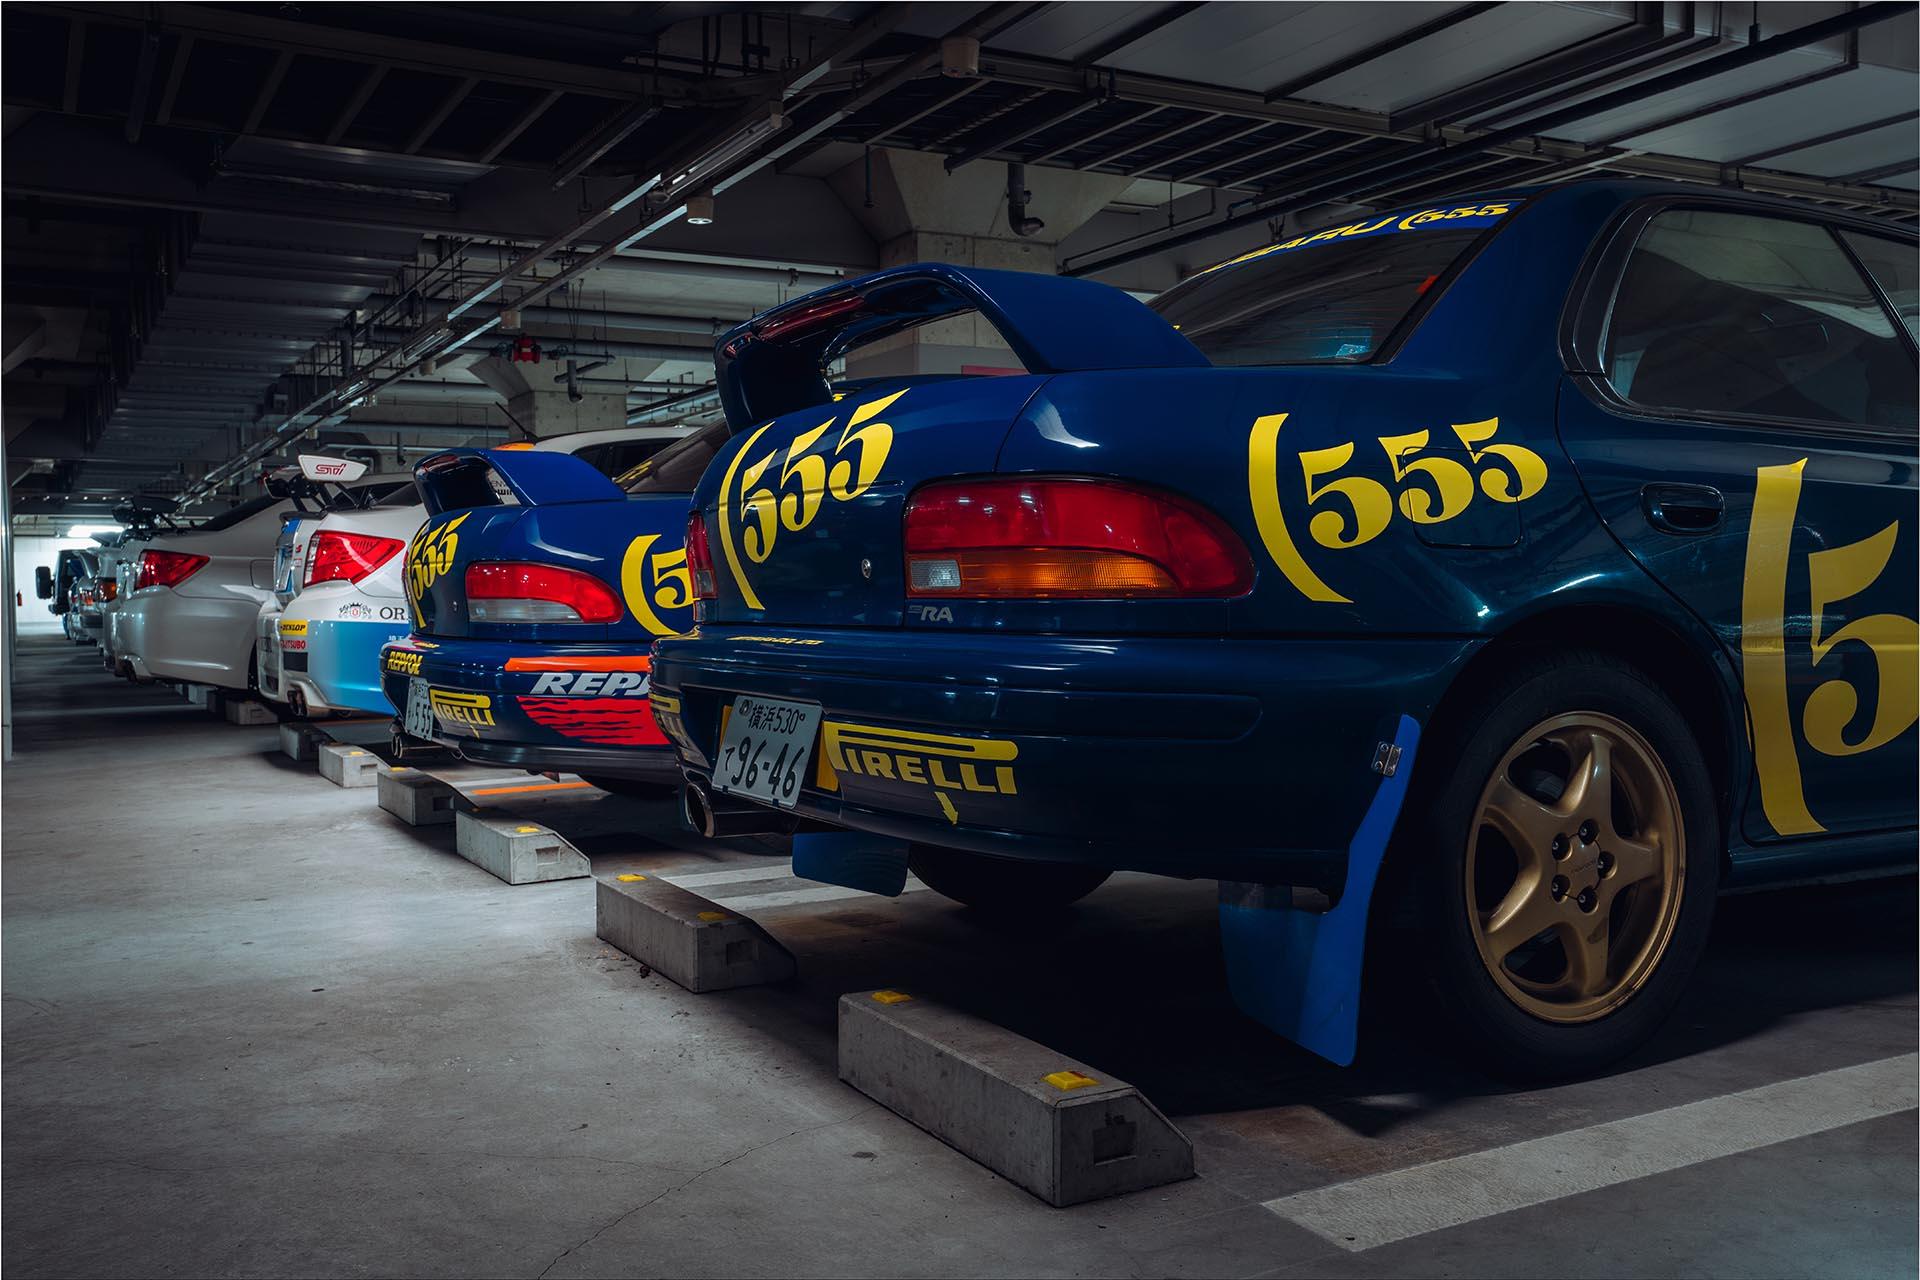 Retro Subaru collectie parkeergarage Subaru Impreza schuin achter